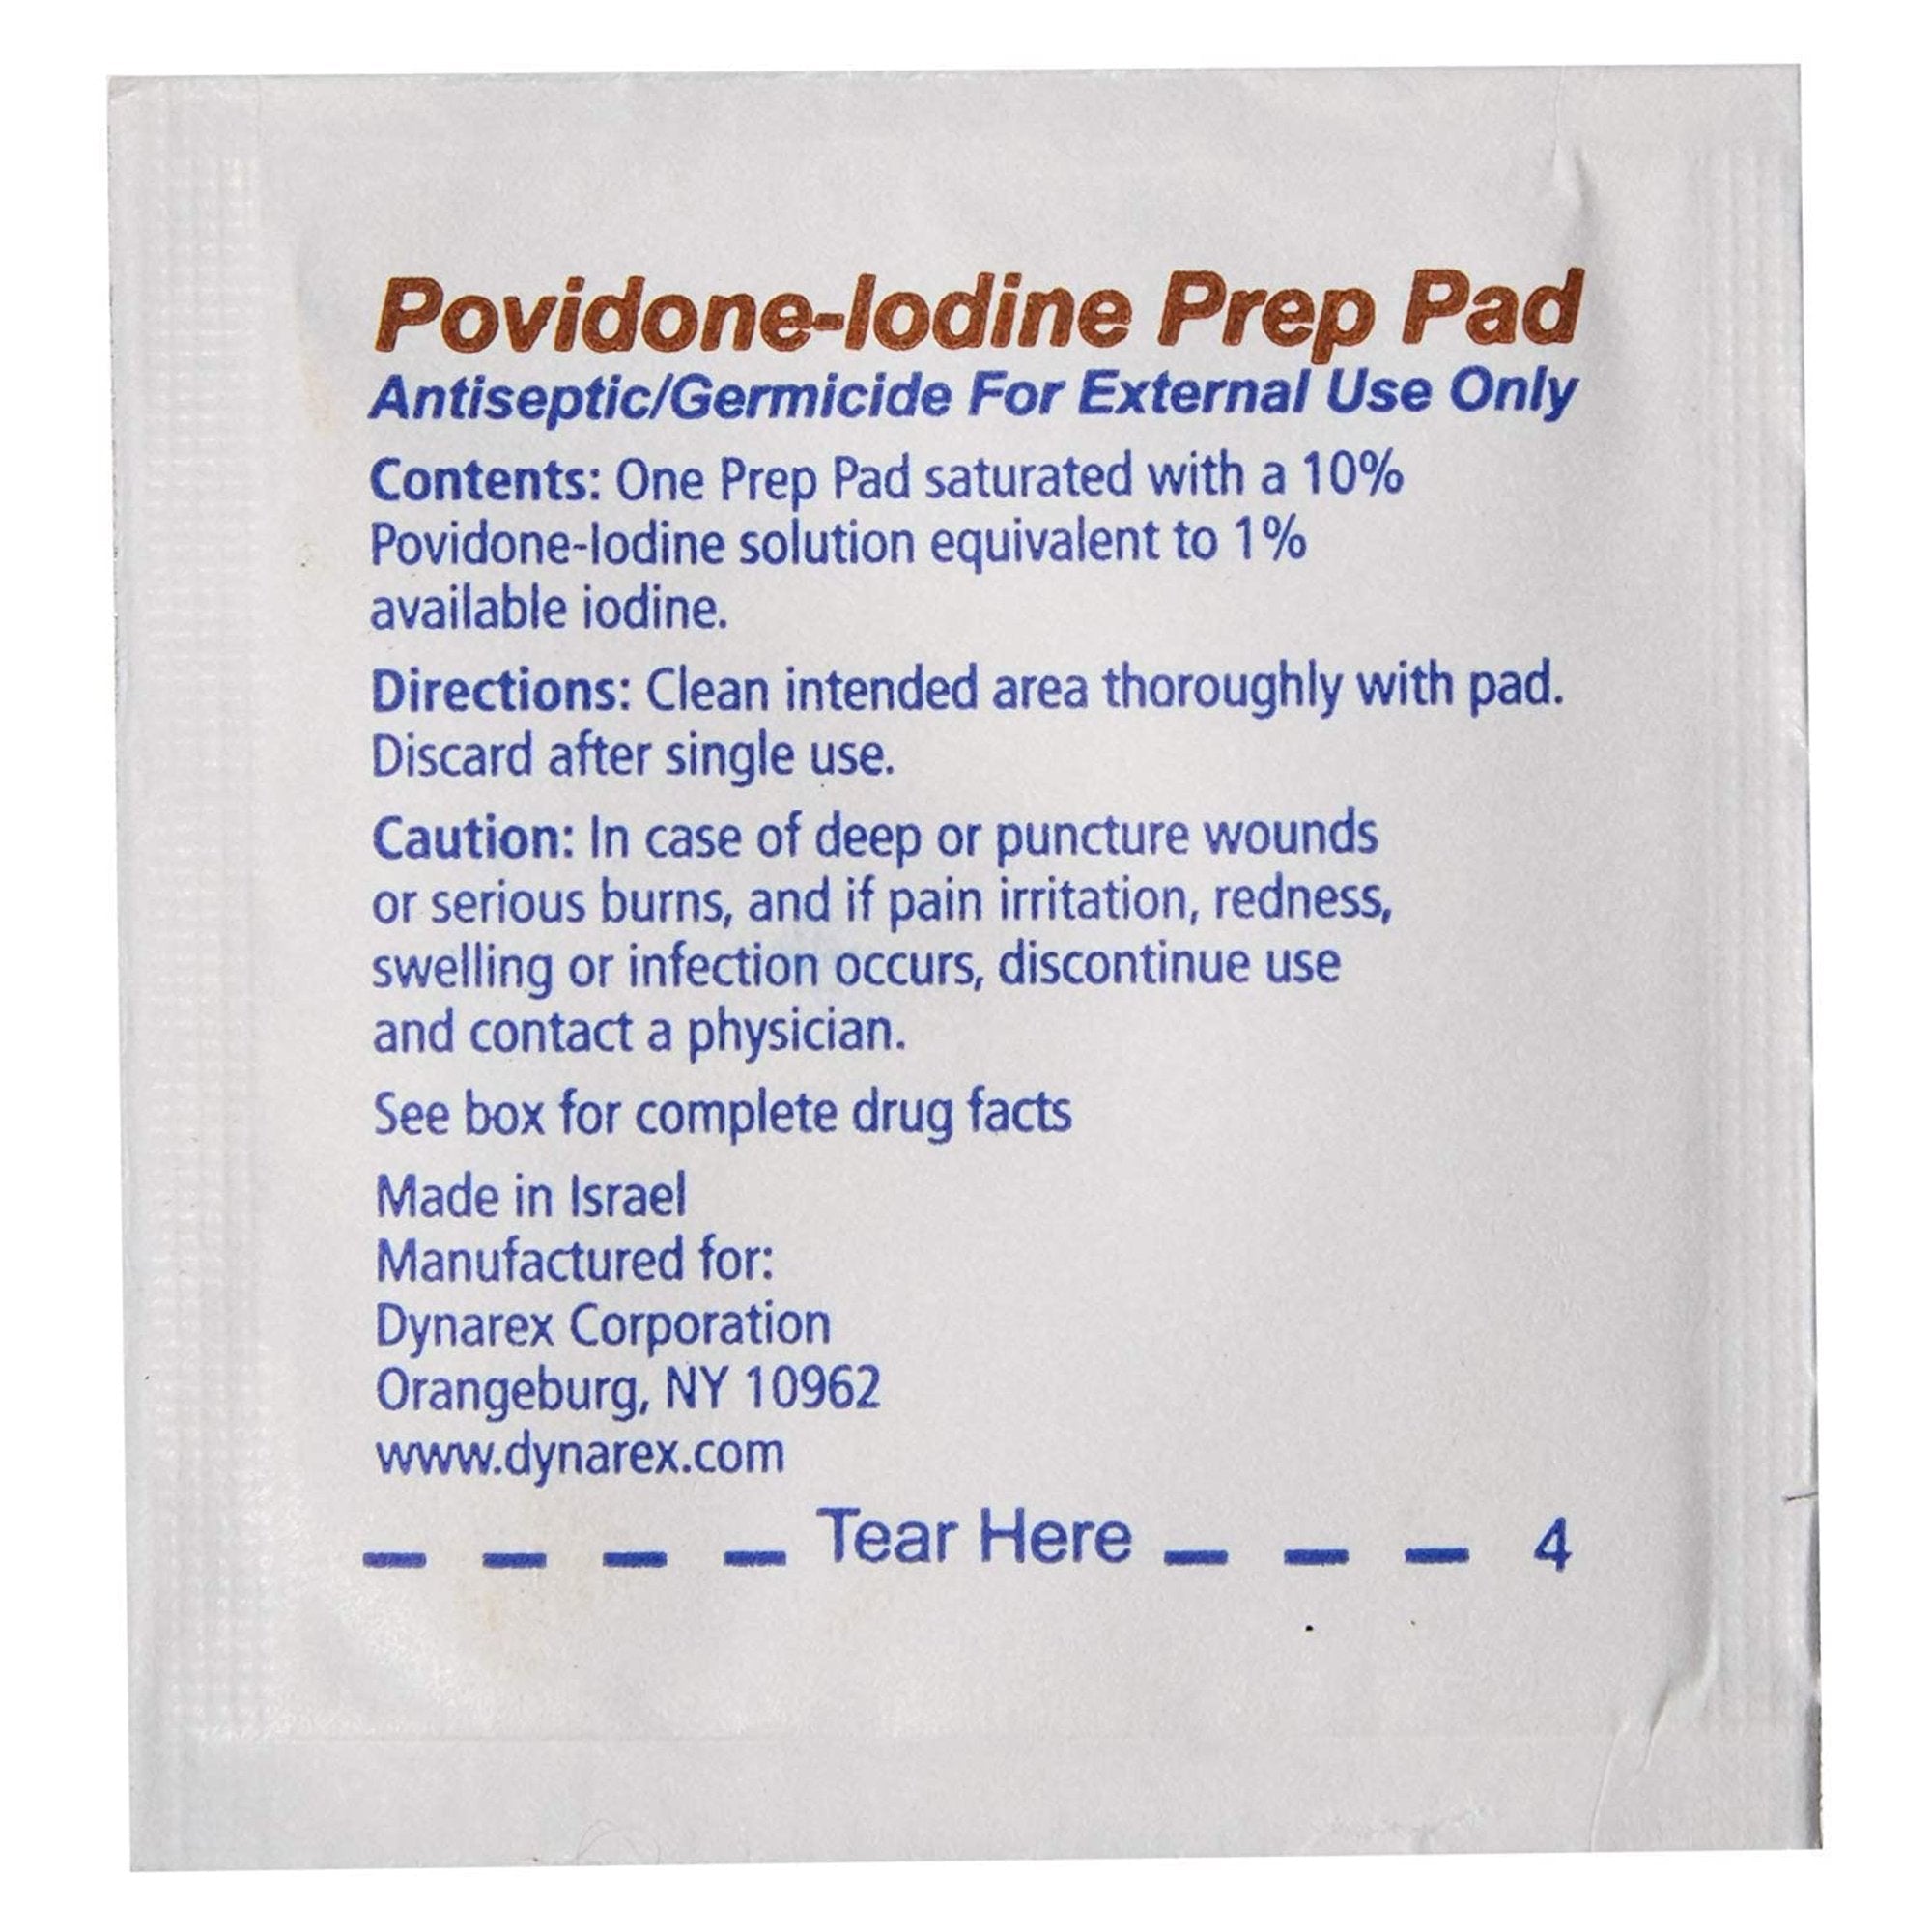 PVP Prep Pad Dynarex 10% Strength Povidone-Iodine Individual Packet Medium NonSterile